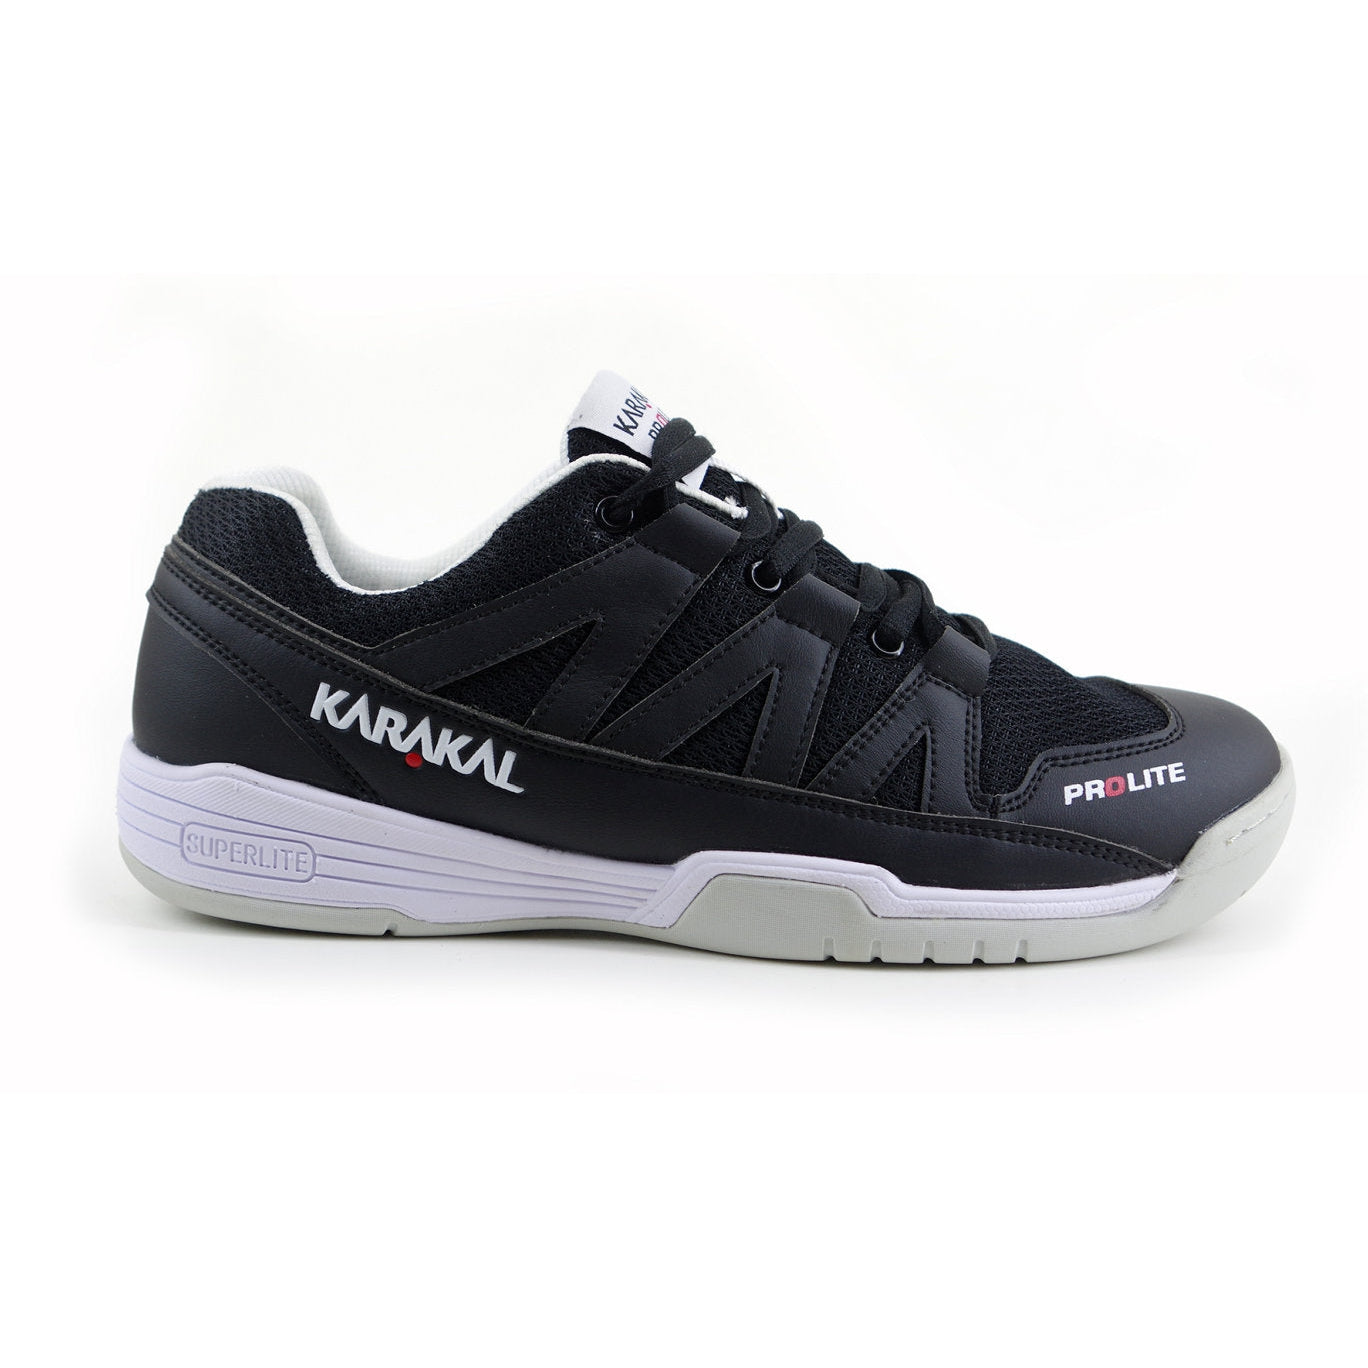 Karakal (Kf950) Prolite Court Shoe - Size 44